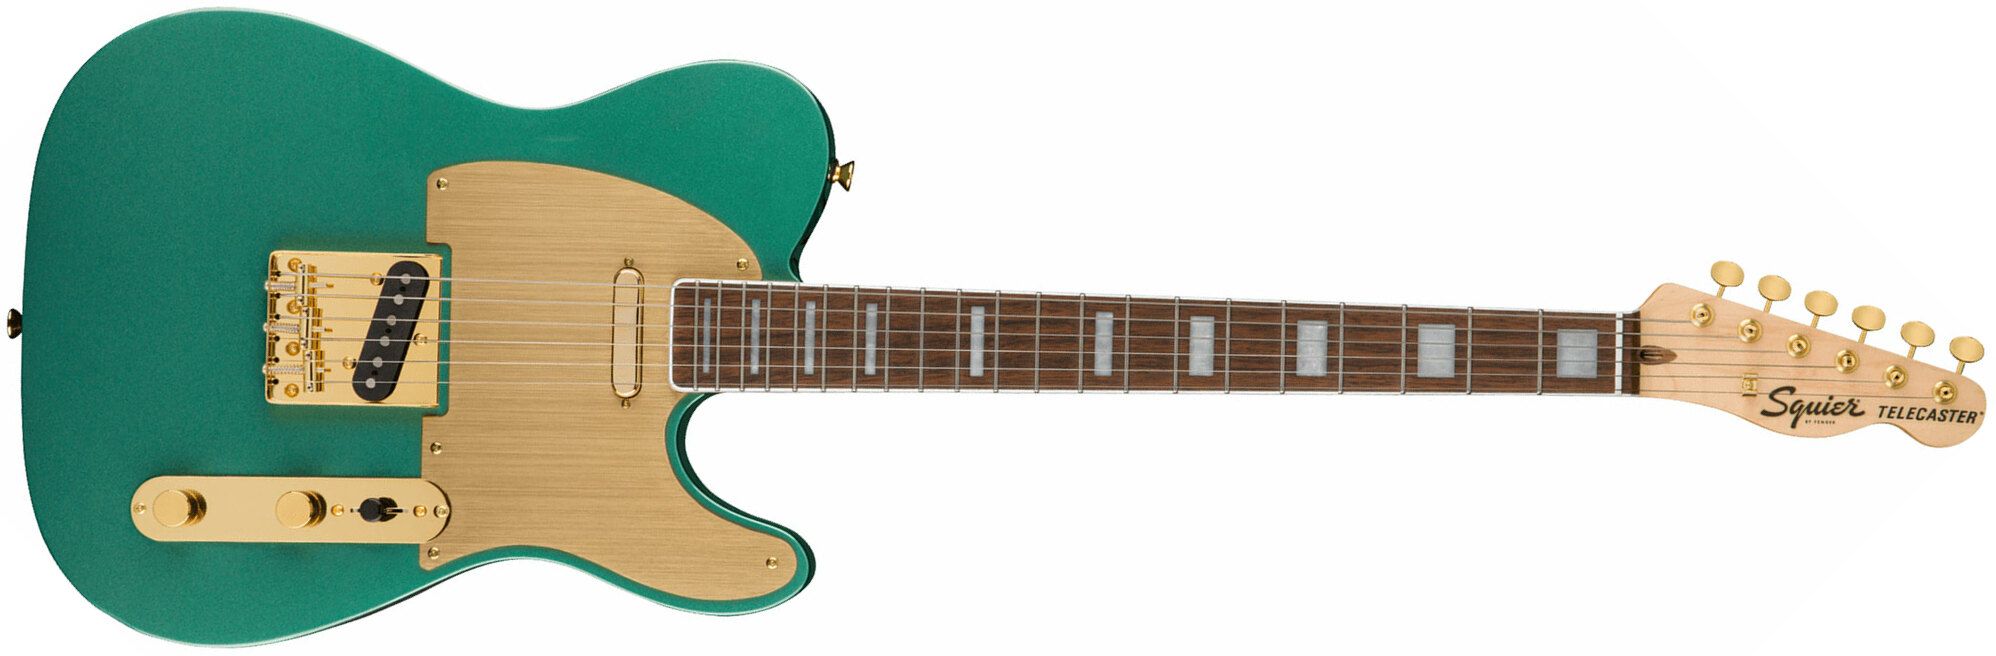 Squier Tele 40th Anniversary Gold Edition Lau - Sherwood Green Metallic - Televorm elektrische gitaar - Main picture